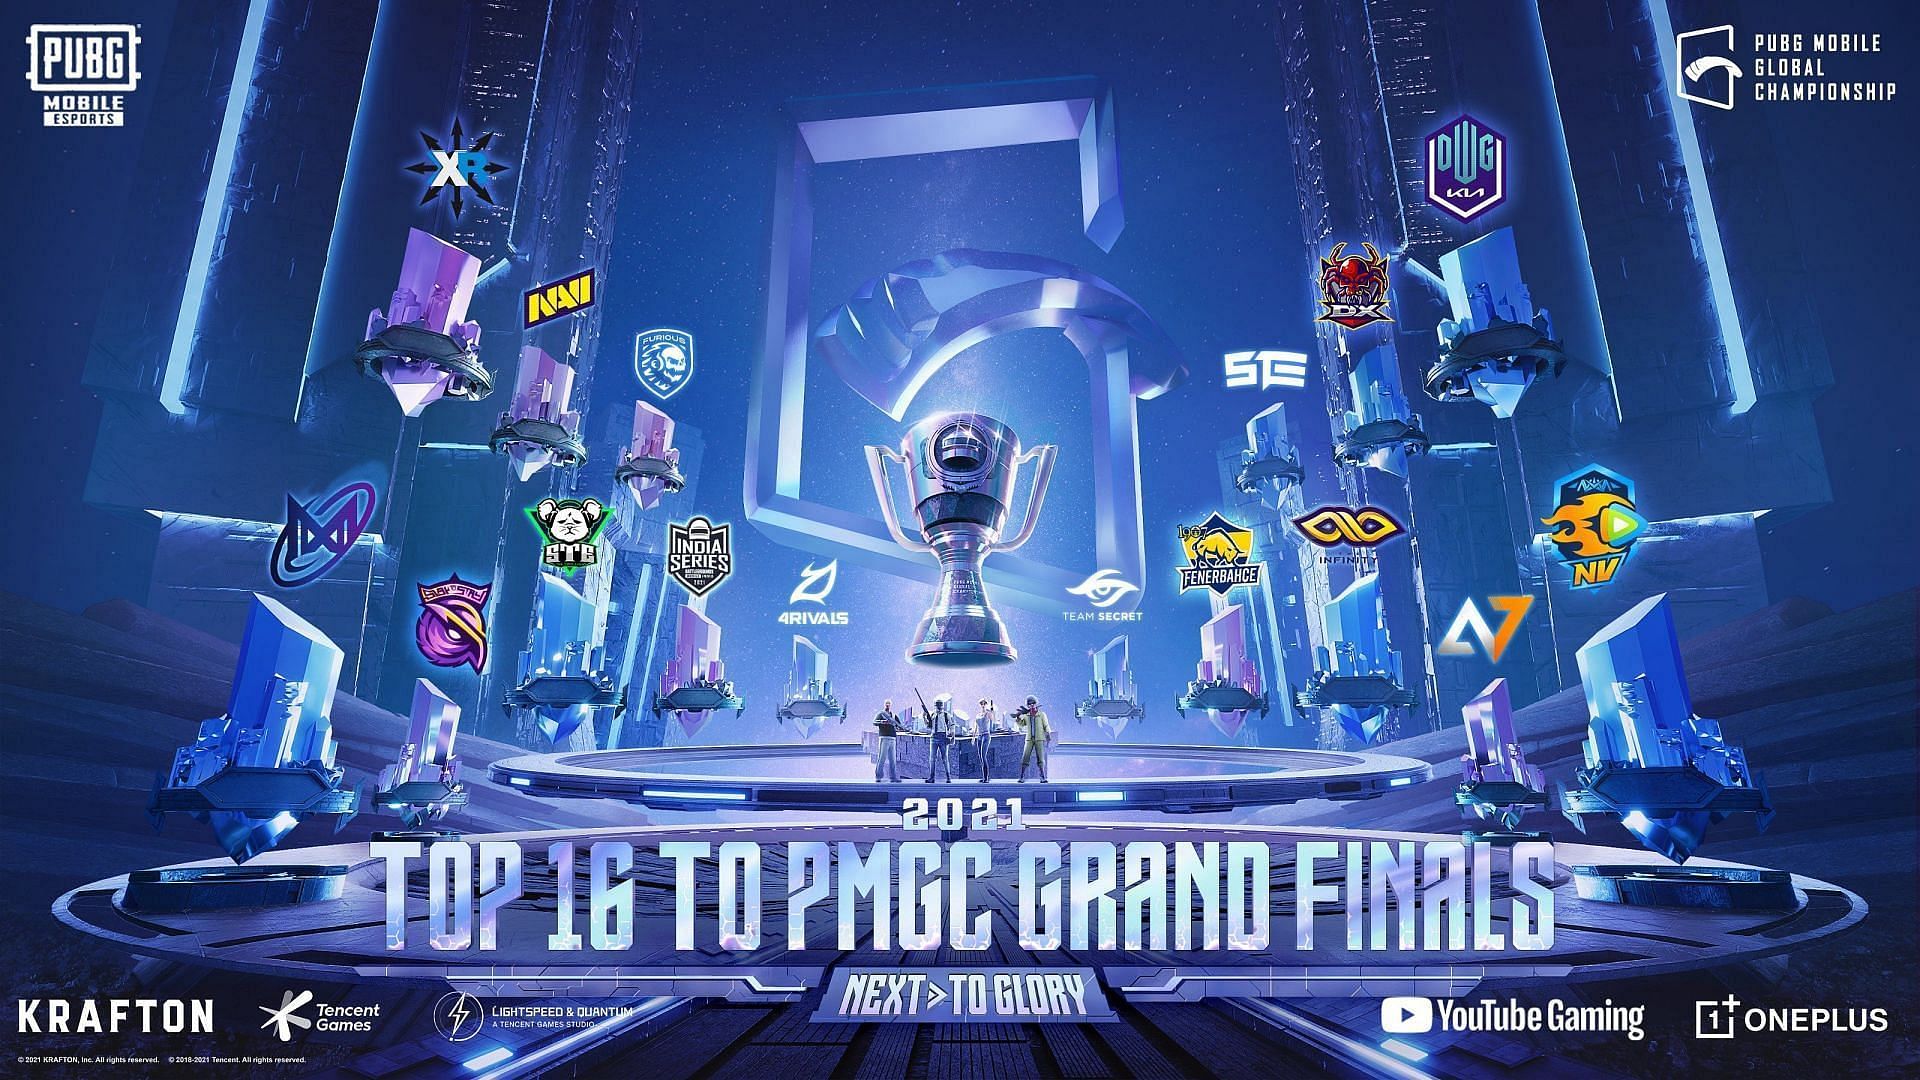 Details about the PMGC 2021 Grand Finals (Image via Krafton)